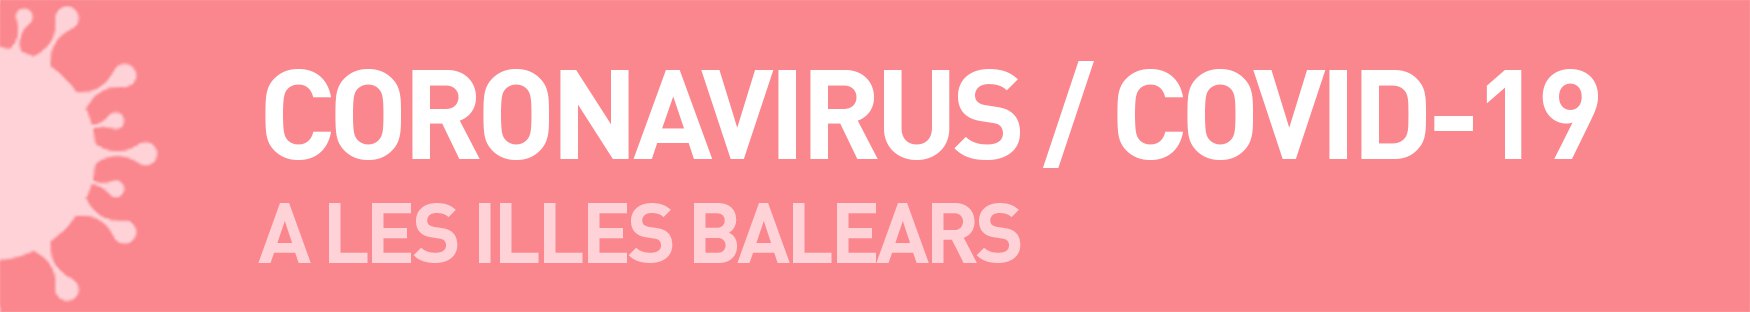 Coronavirus COVID-19 - IB-SALUT | Servicio de Salud de las Islas Baleares